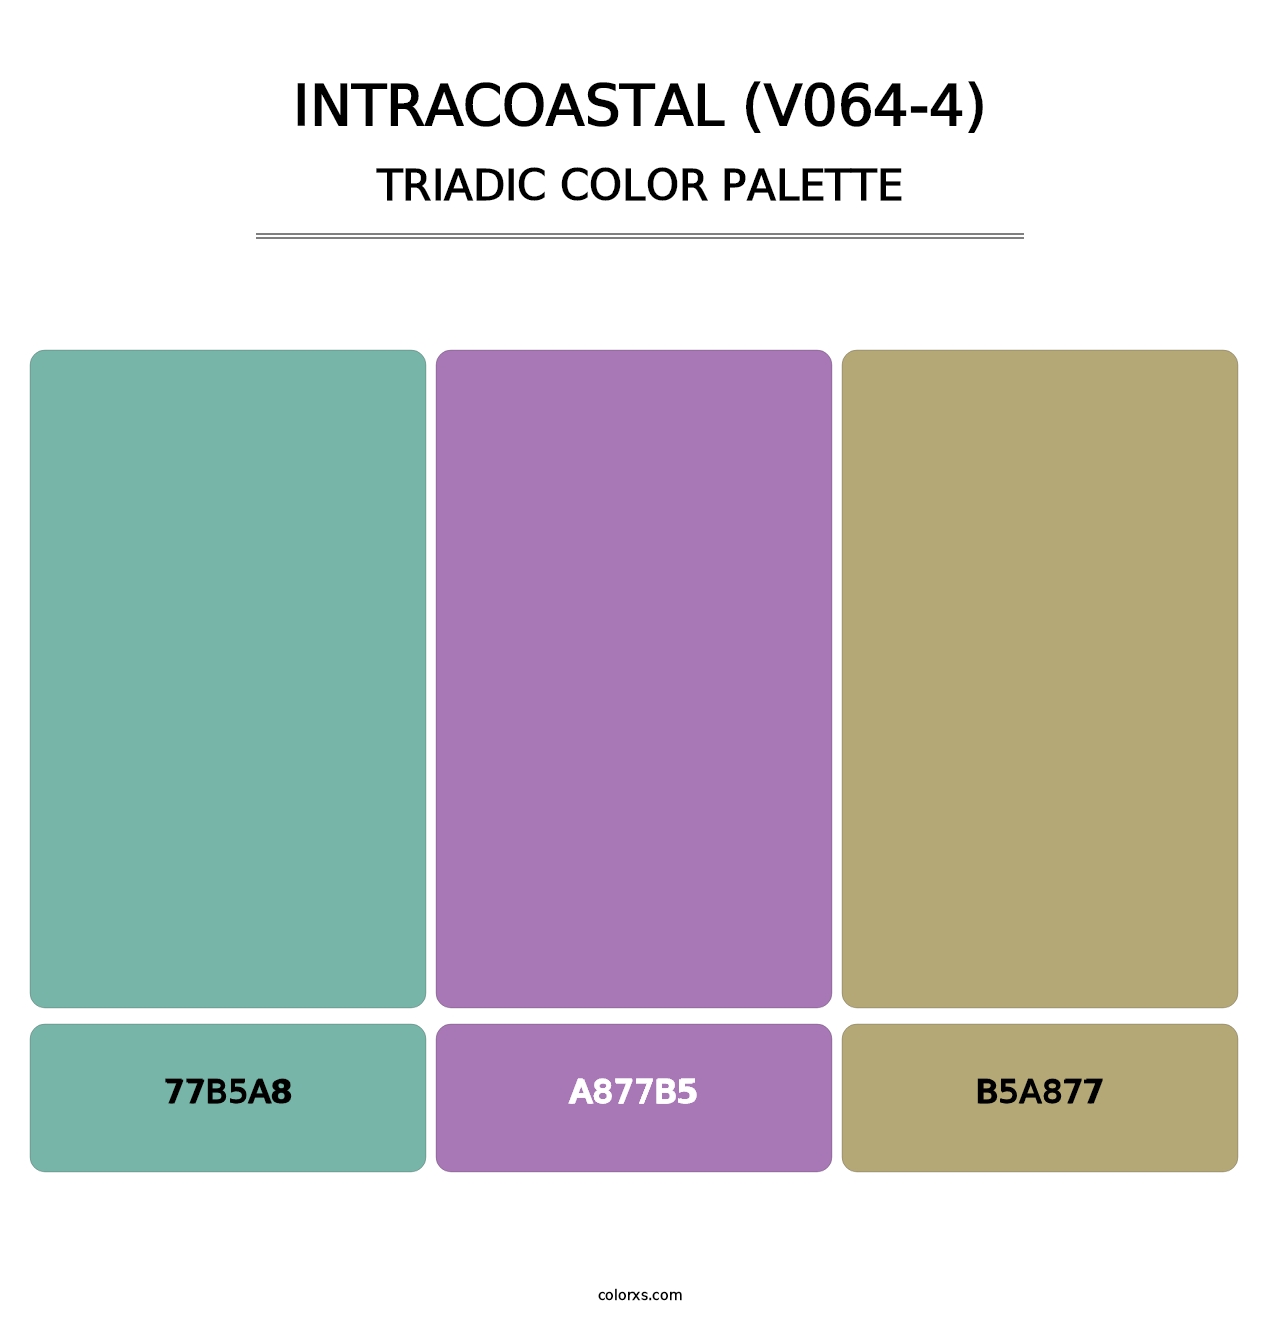 Intracoastal (V064-4) - Triadic Color Palette